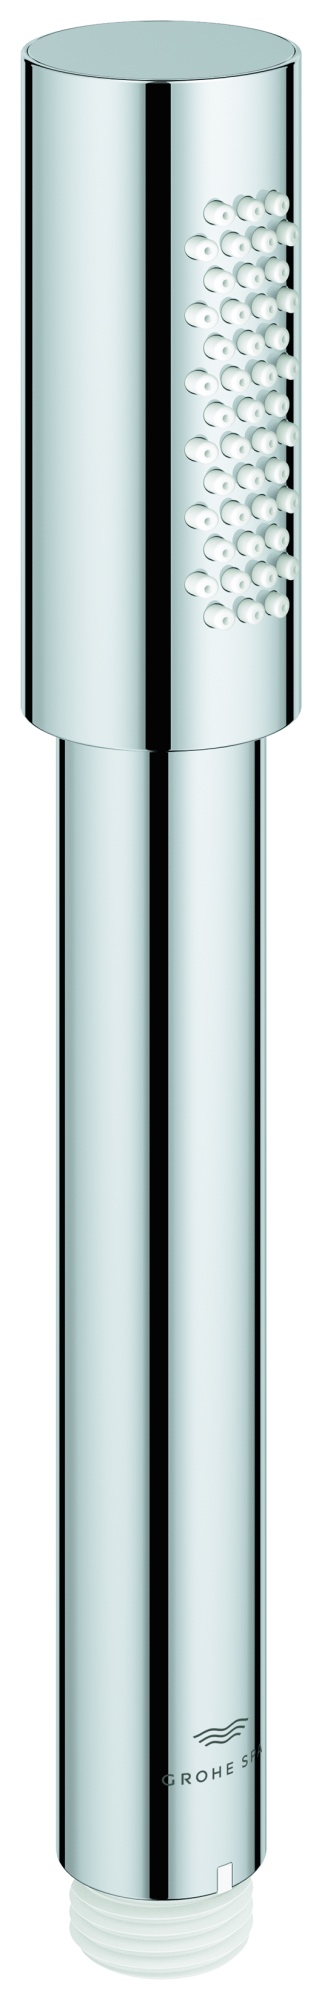 Handbrause Rainshower Aqua Stick 26889, 1 Strahlart, Metall, chrom